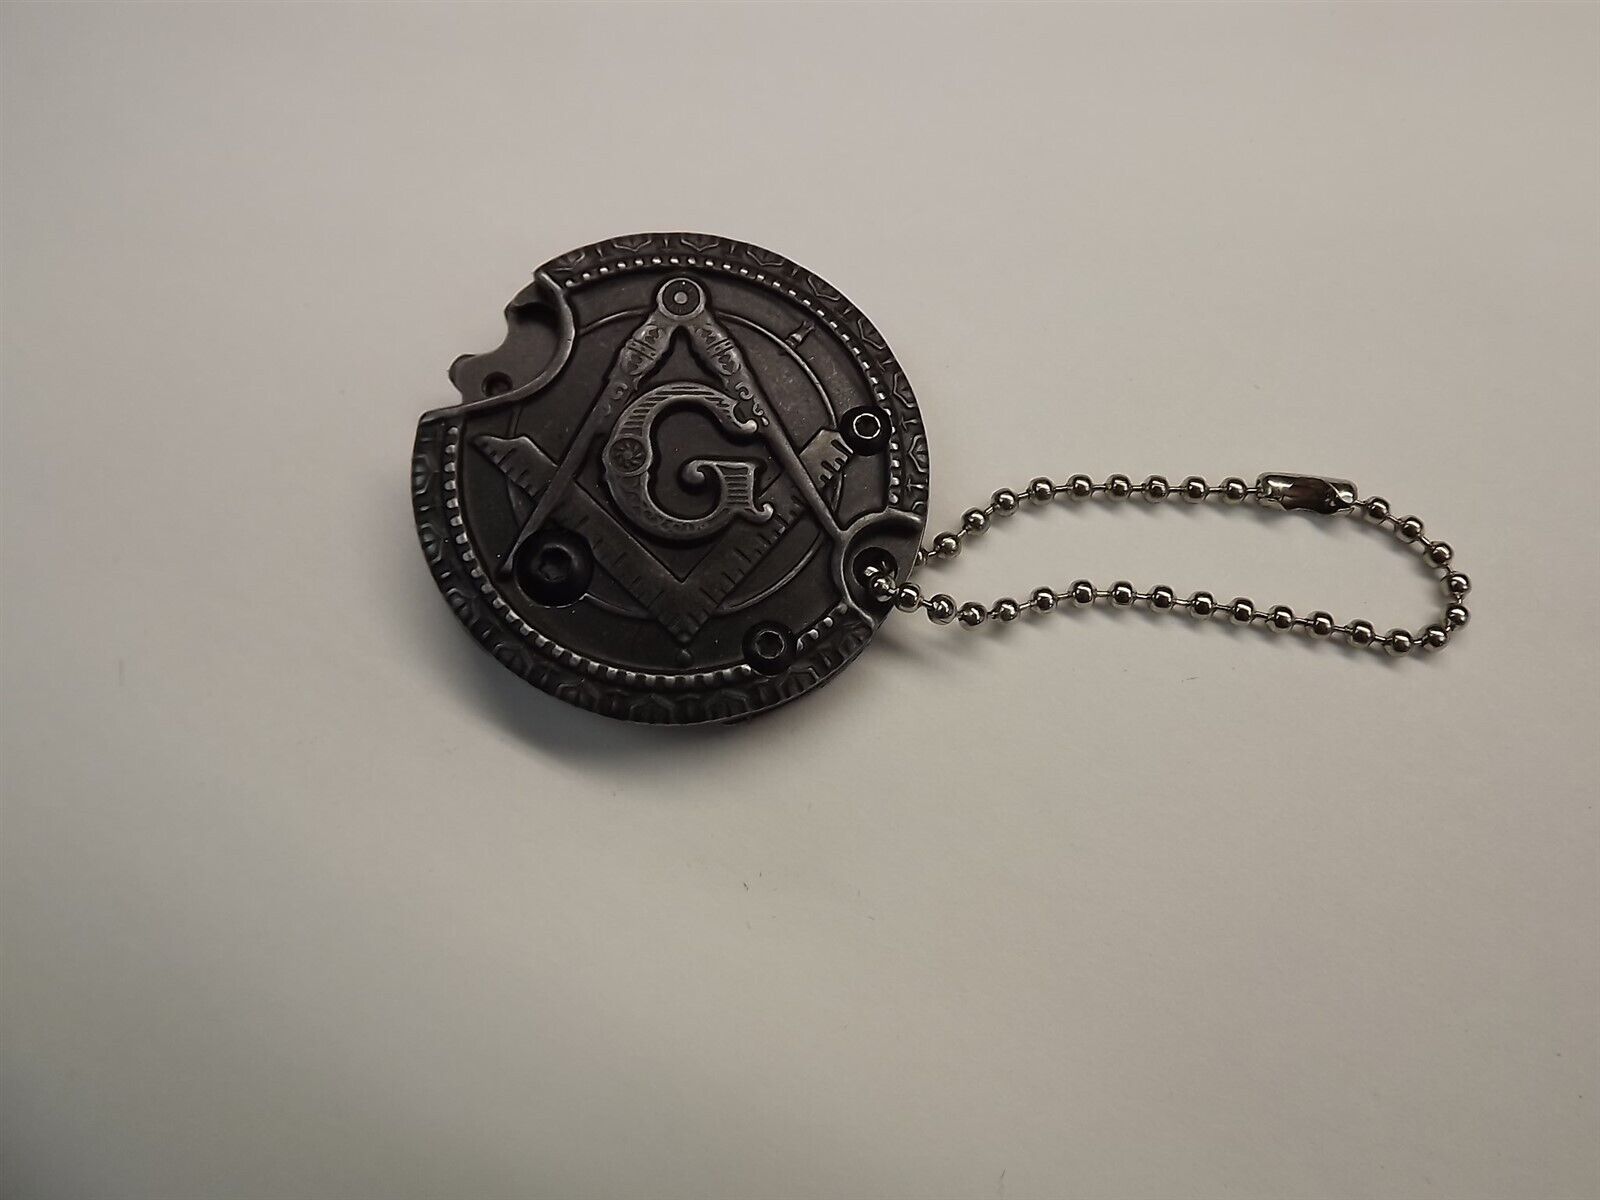 New Masonic Mason Enameled Key Chain Square & Compass WITH KNIFE antique-tone